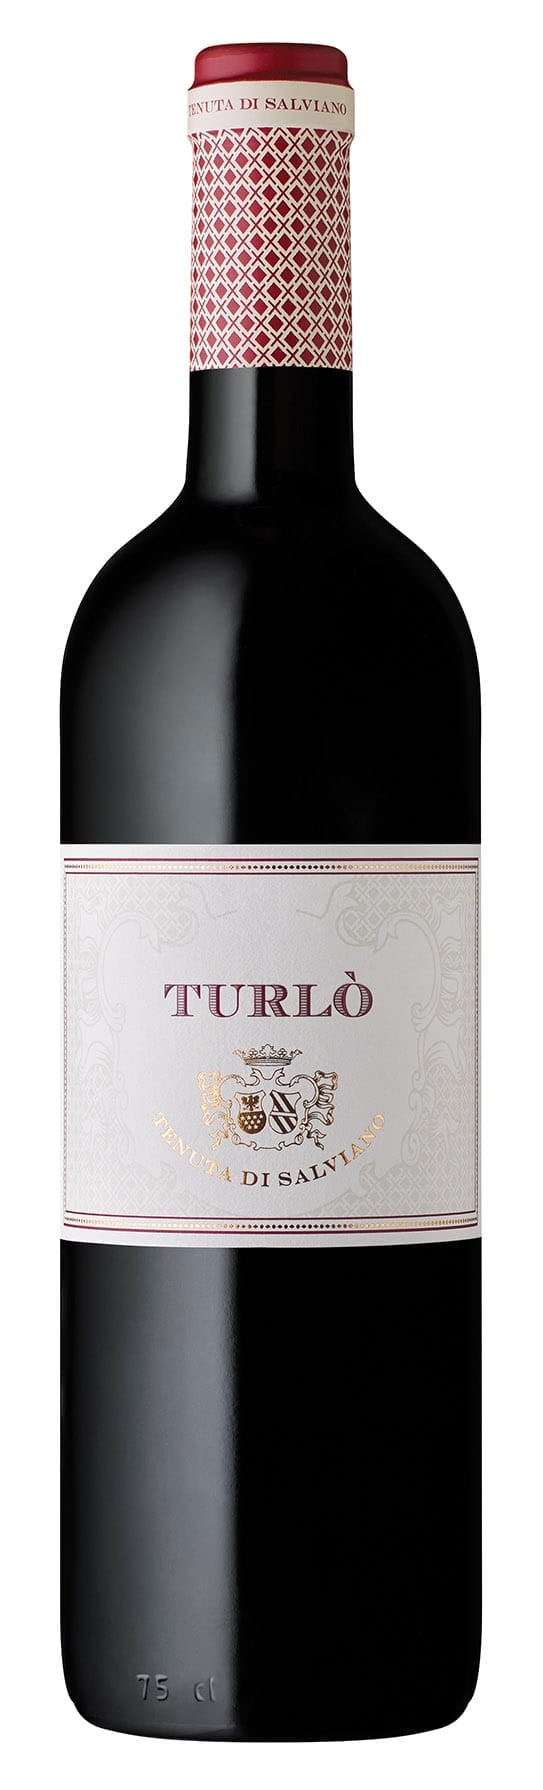 Italian wine bottle, red wine, Turlo, Salviano, Umbria